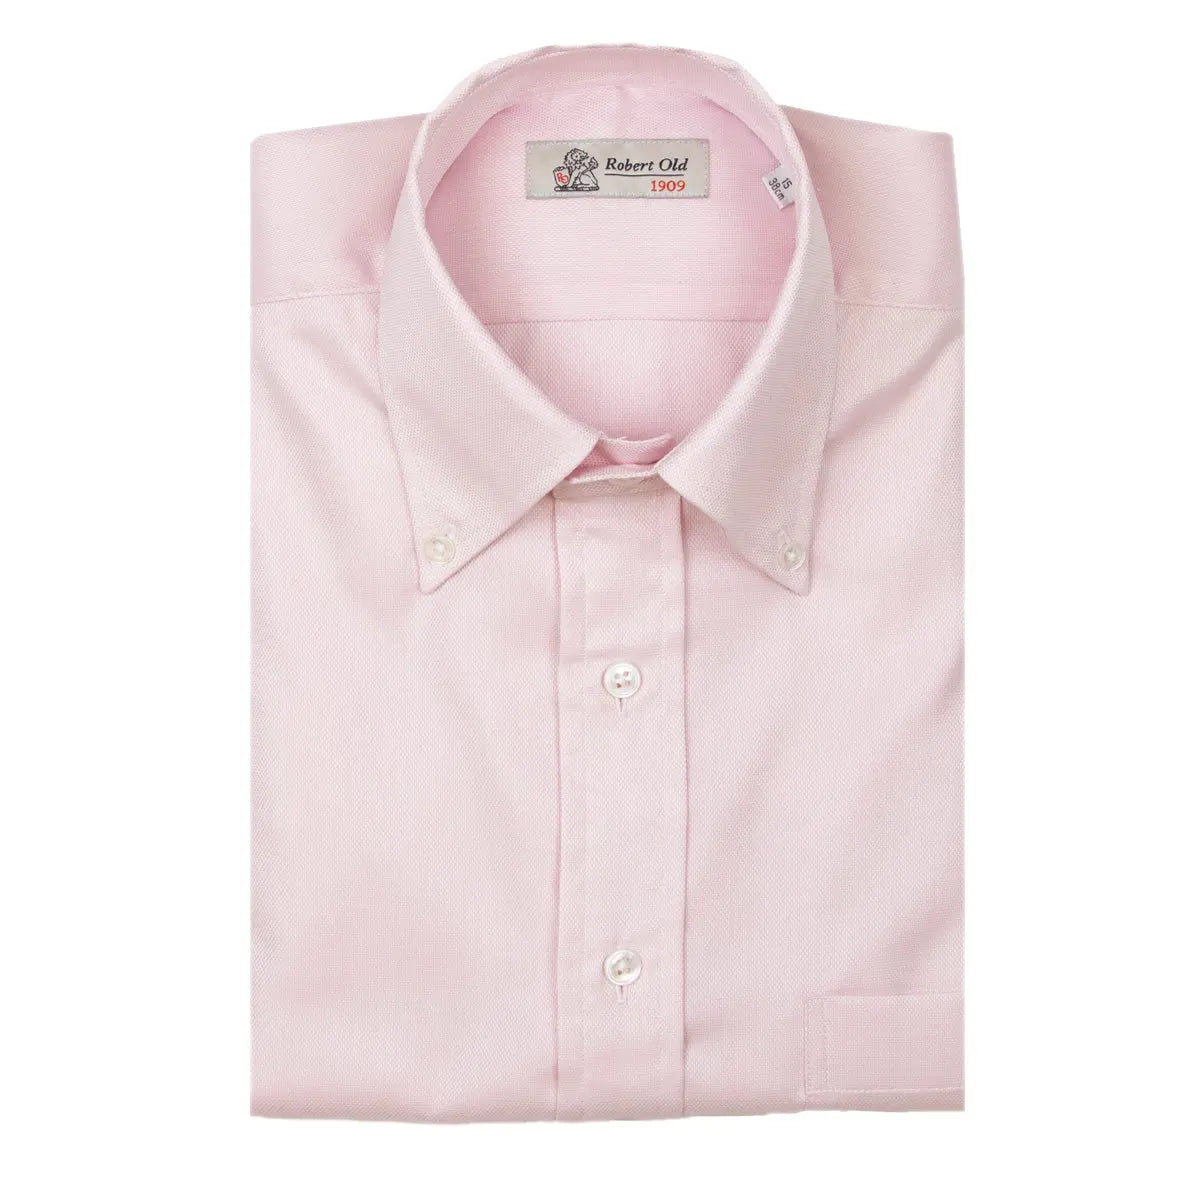 Light Pink Swiss Genio Voyage Cotton Oxford Shirt  Robert Old   